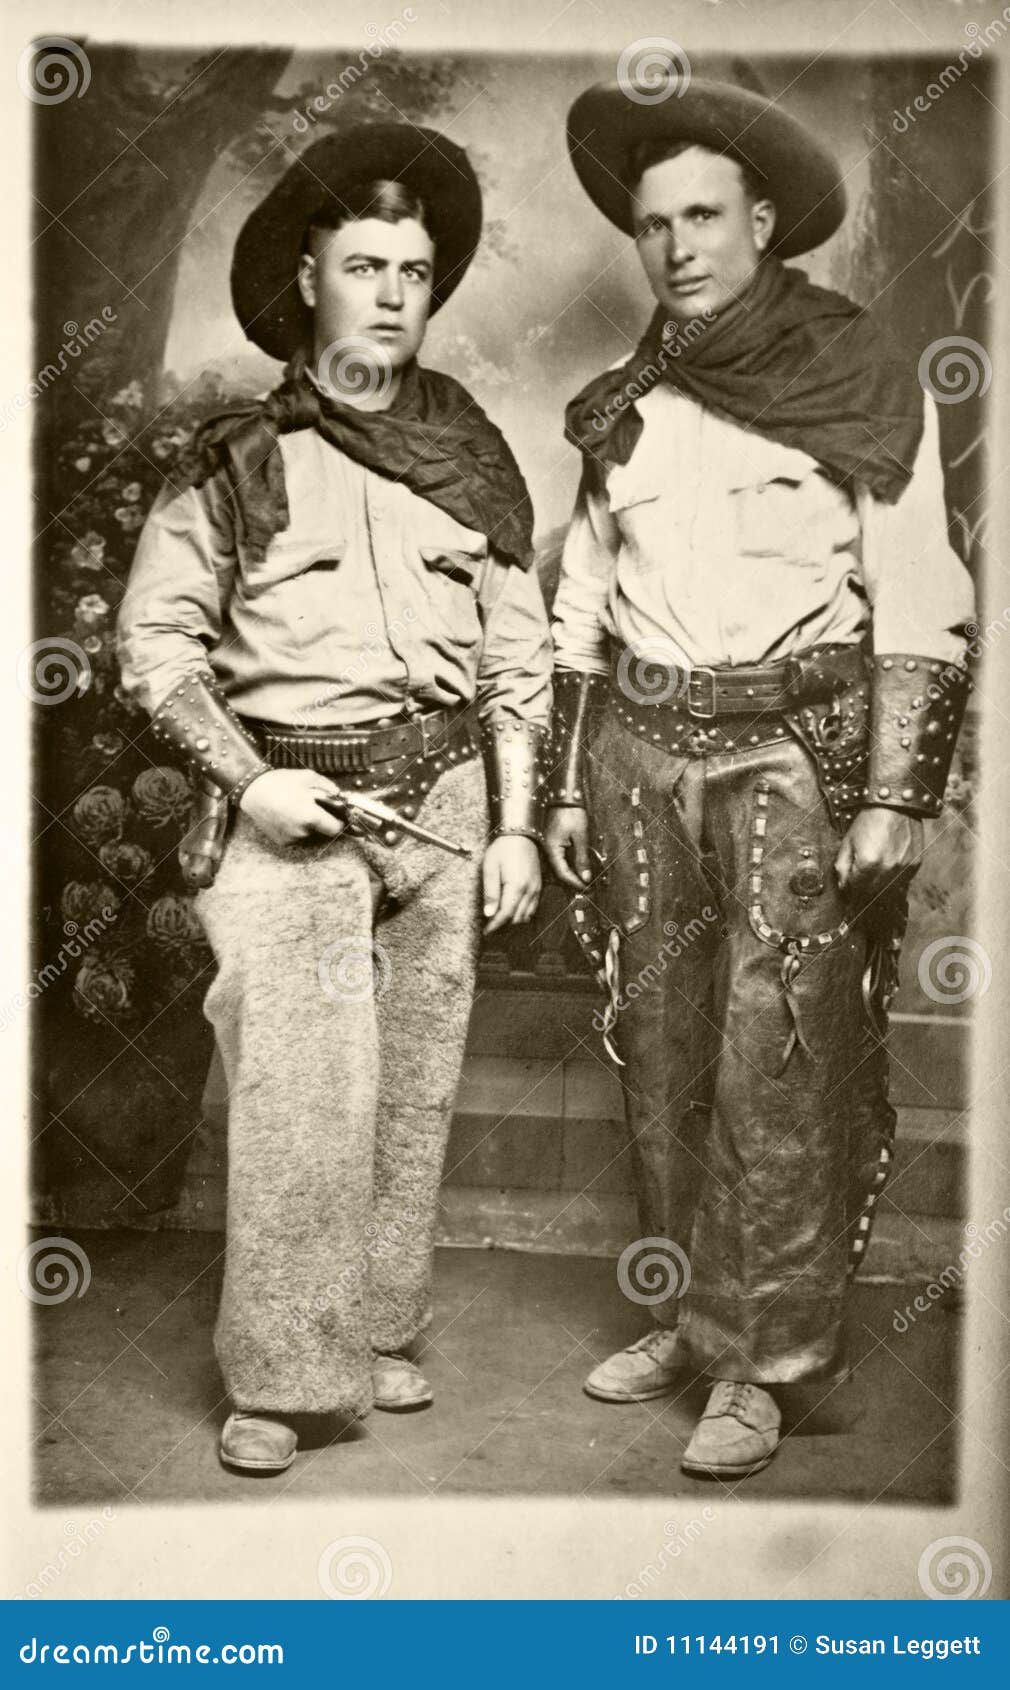 vintage photo of cowboys